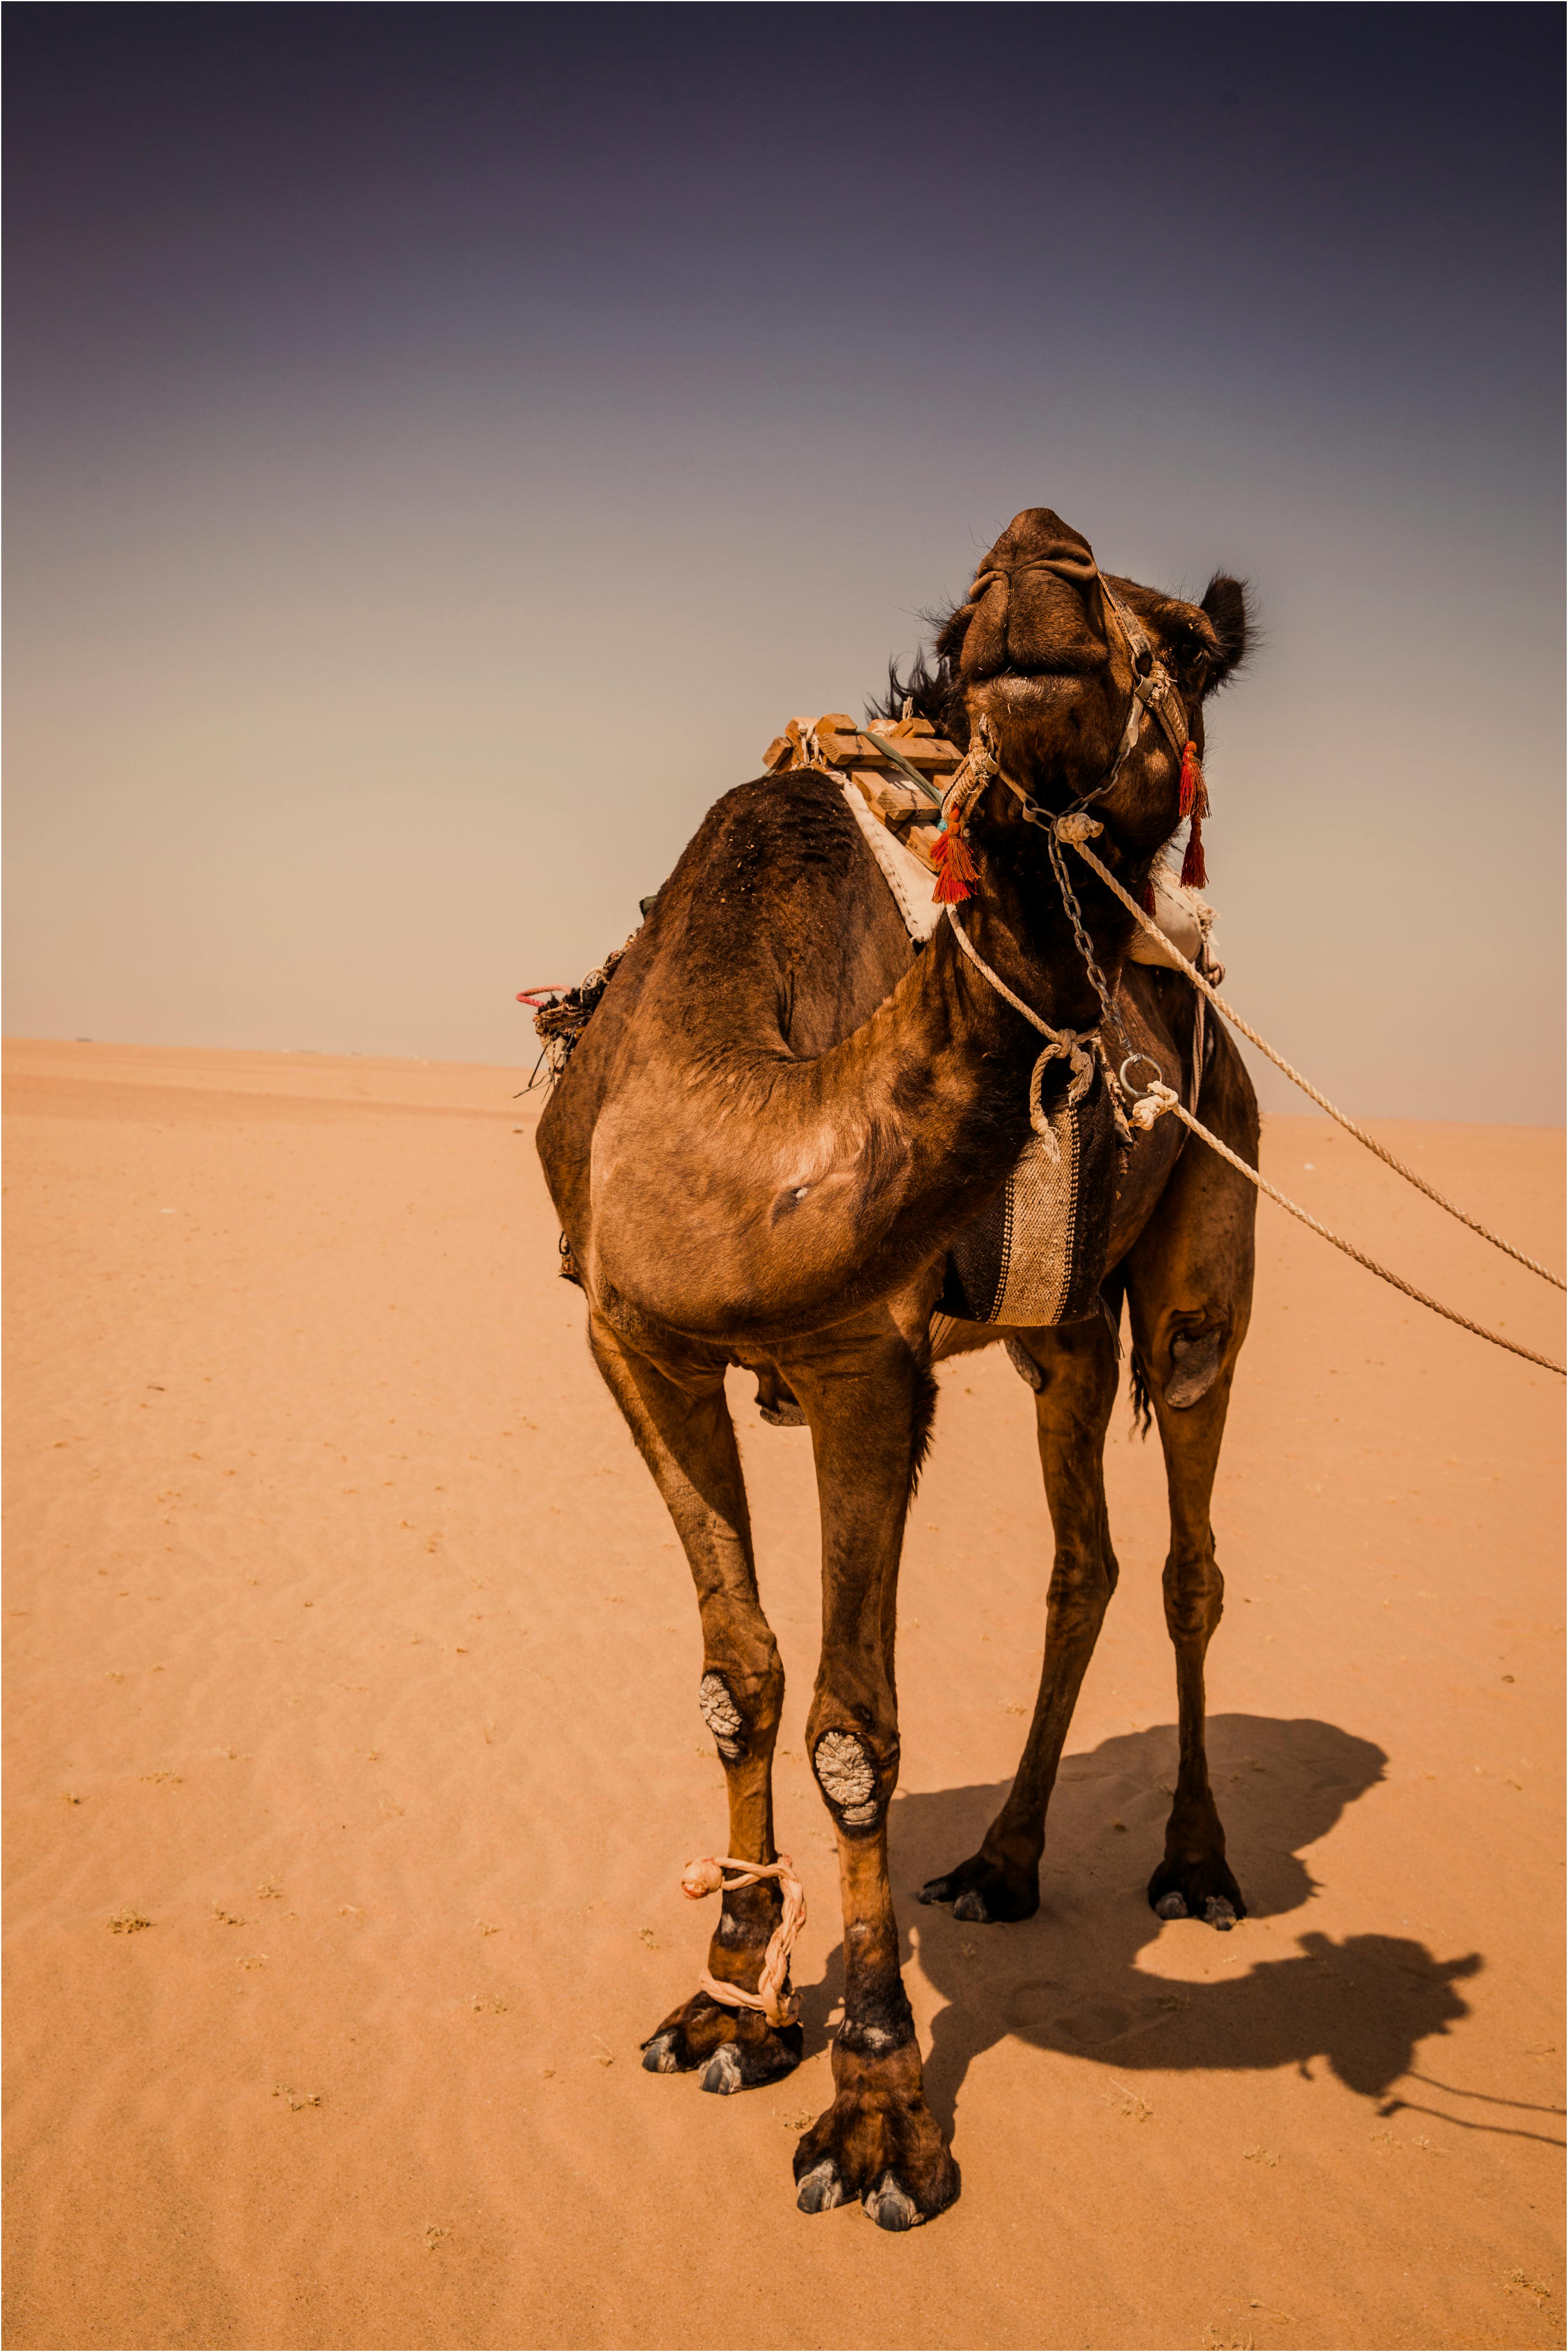 Camel in Namib Desert 4K Wallpaper | HD Wallpapers